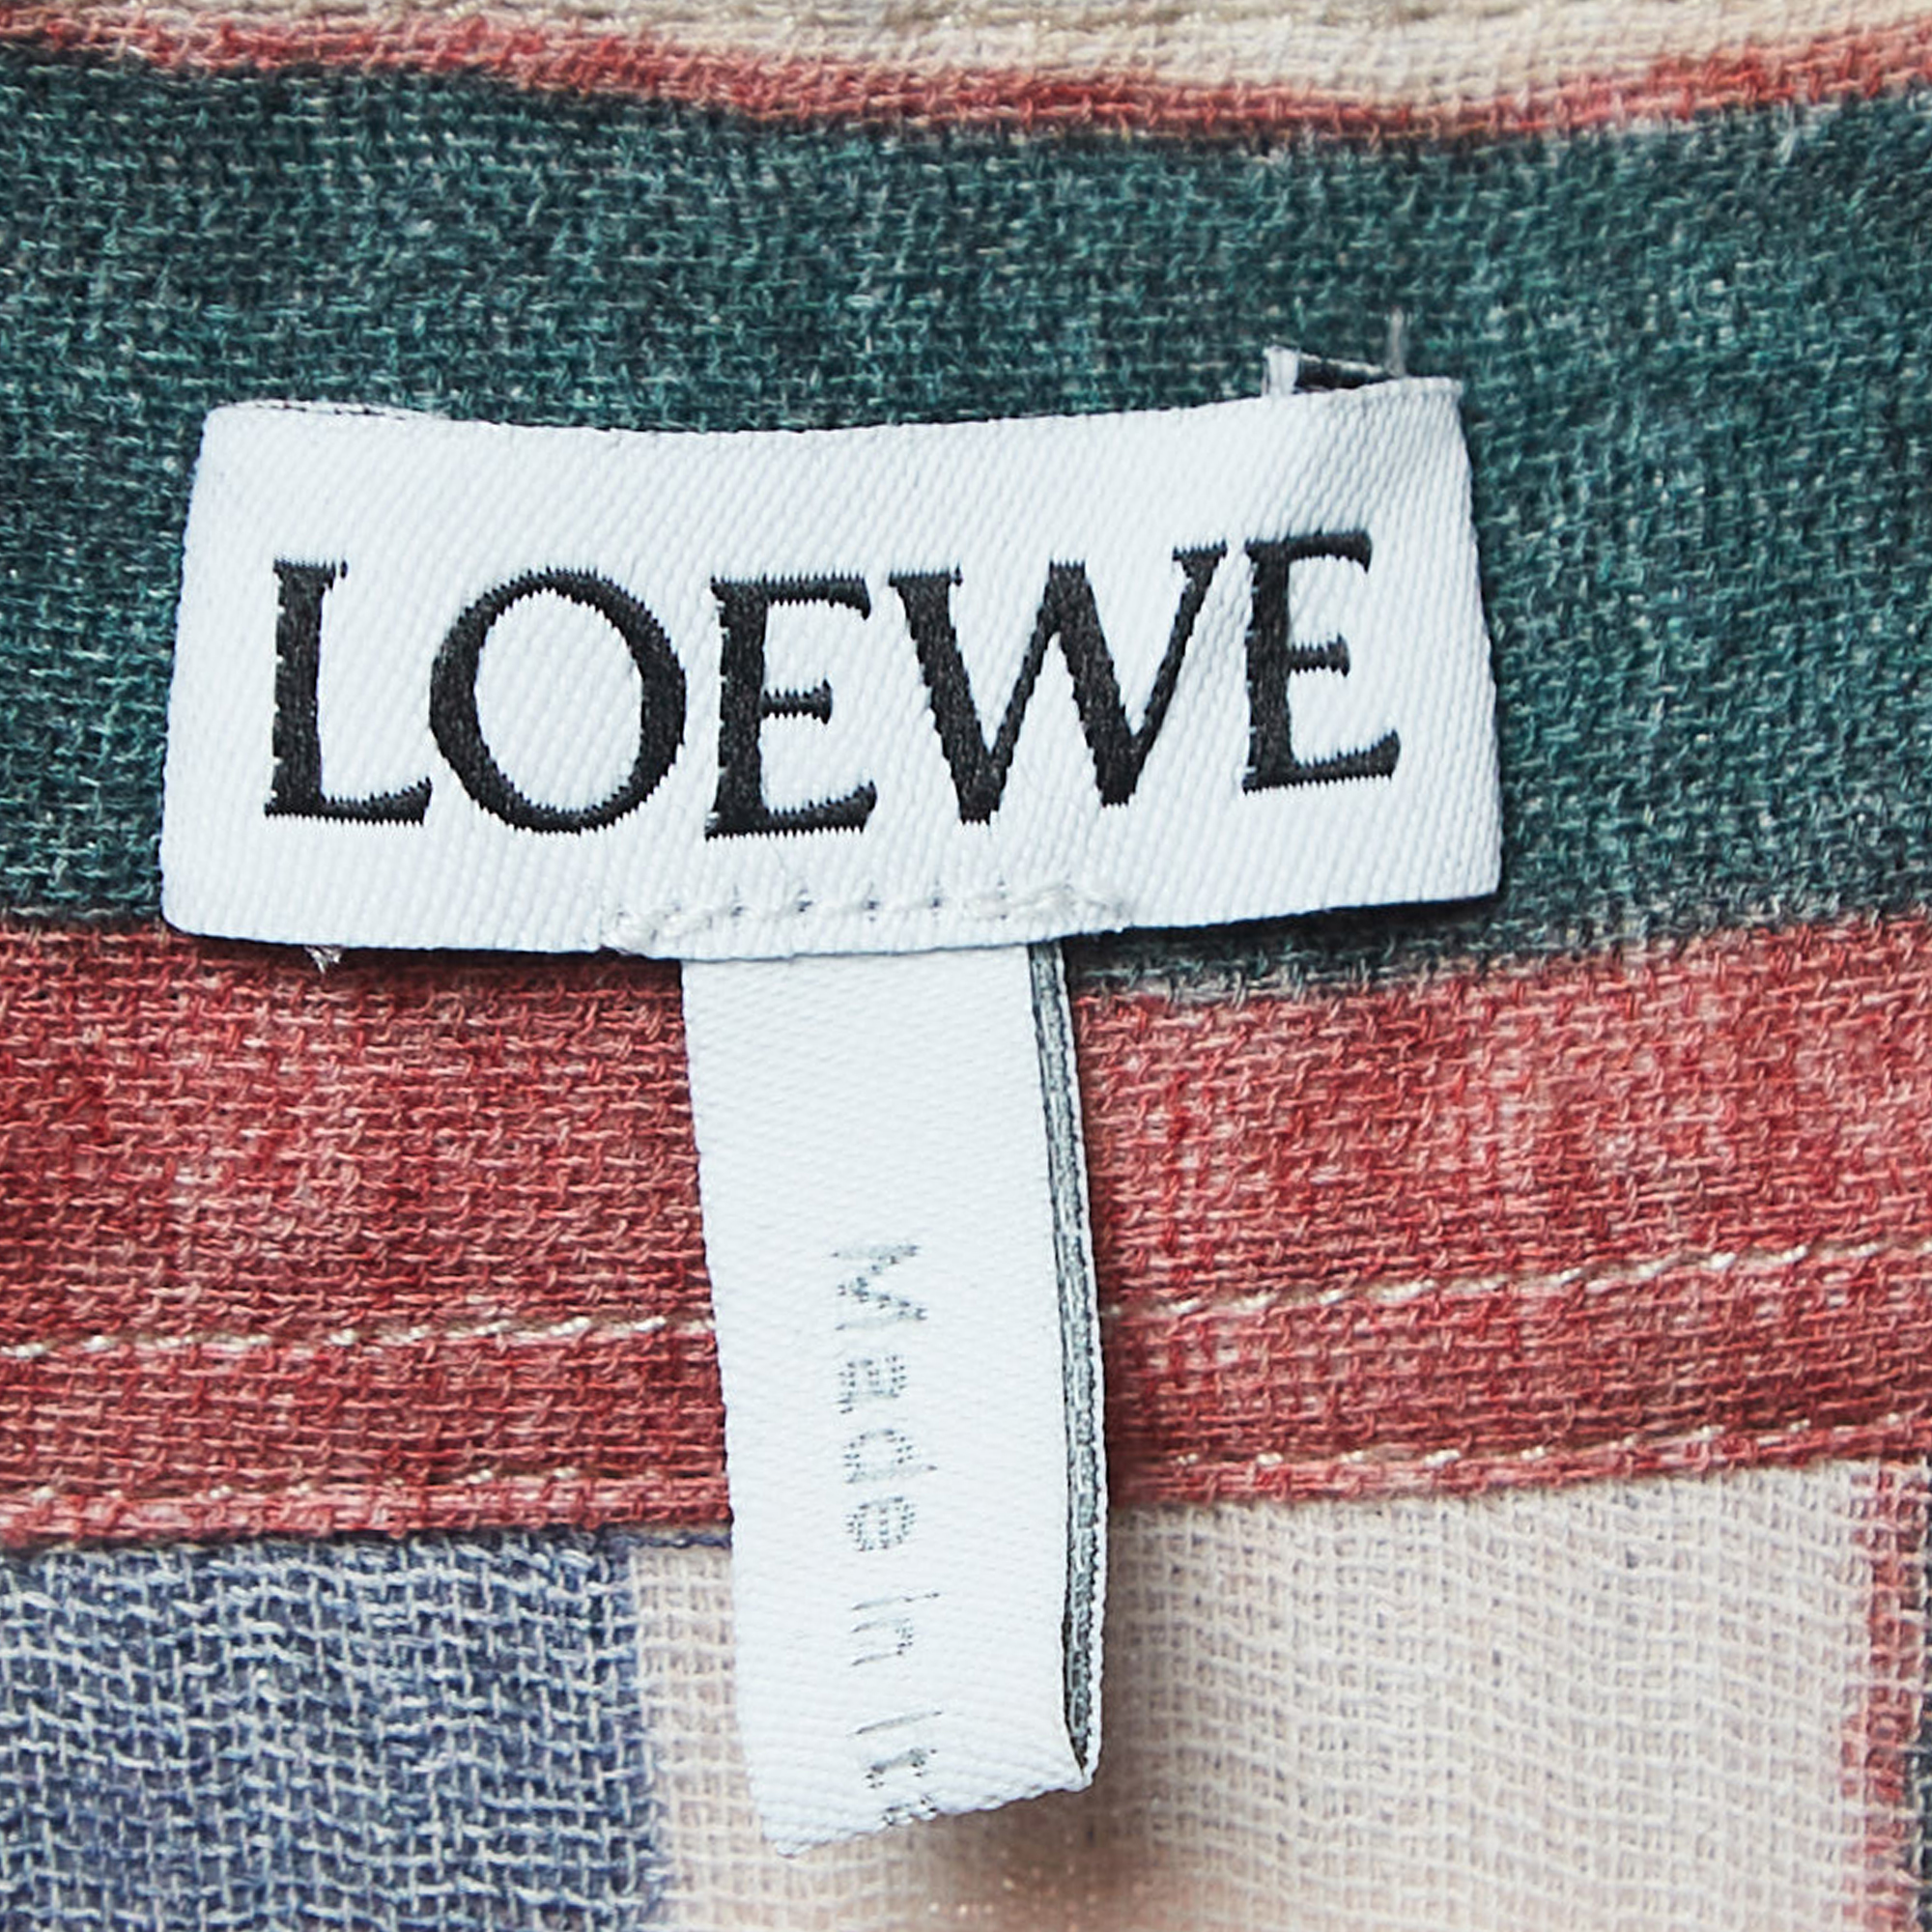 Loewe Multicolor Striped Cotton Shirt Dress XS